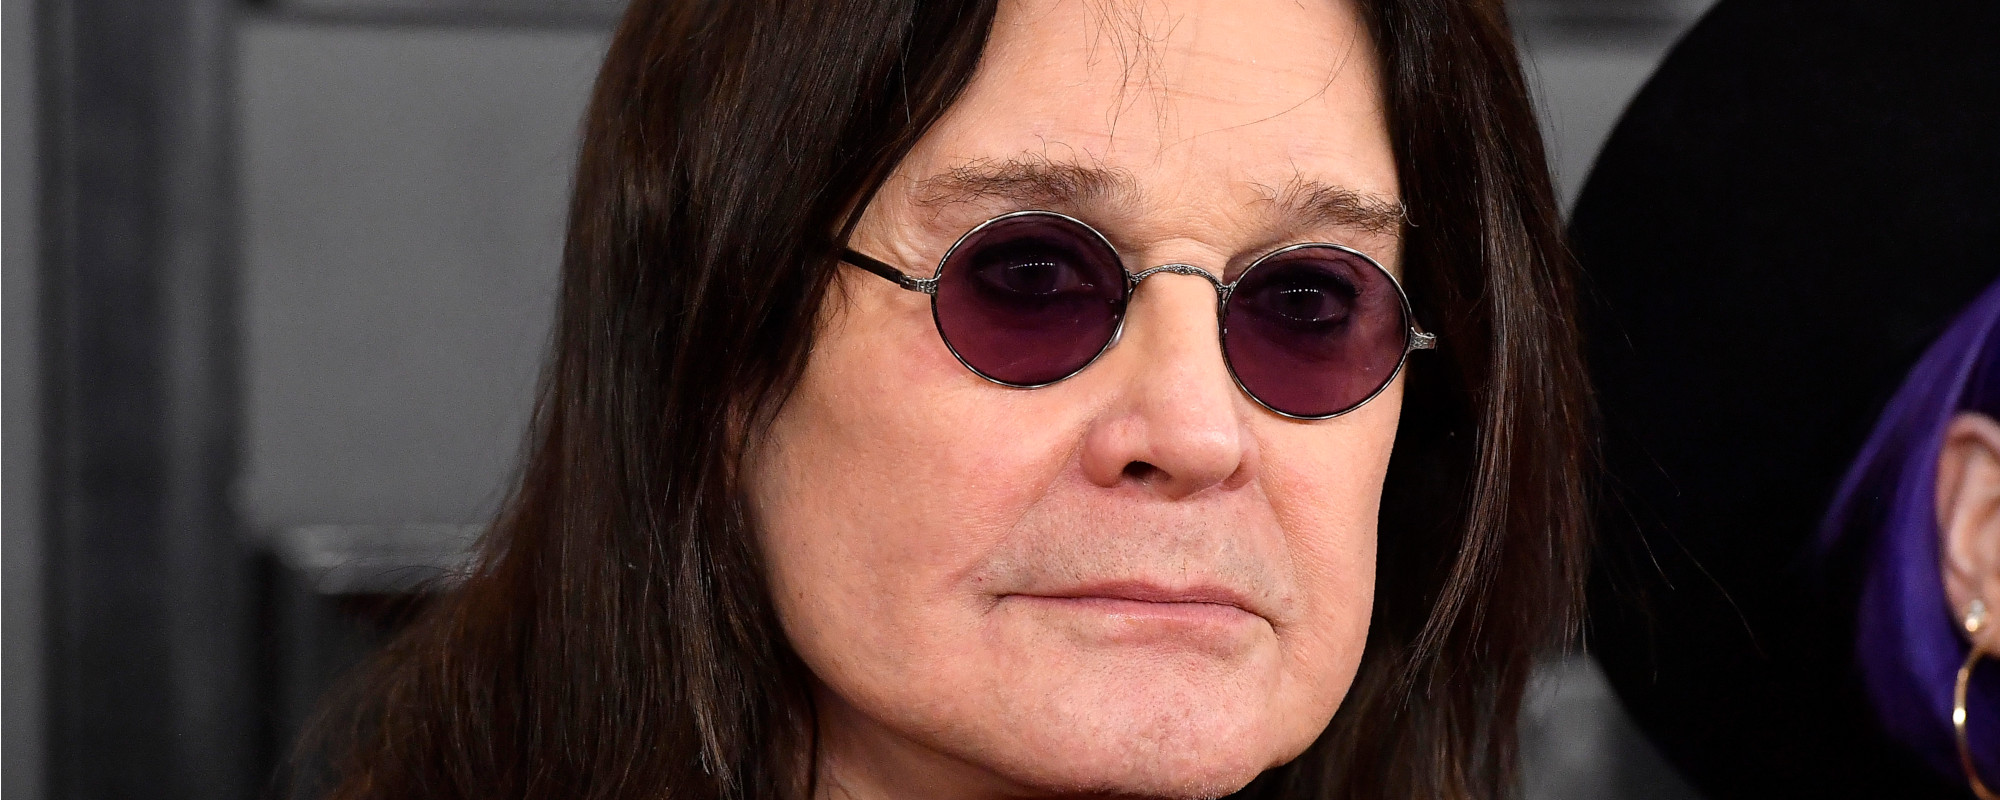 Ozzy Osbourne Recalls Being Utterly Starstruck Meeting Beatles Star, Says “It Was Like Meeting Jesus”